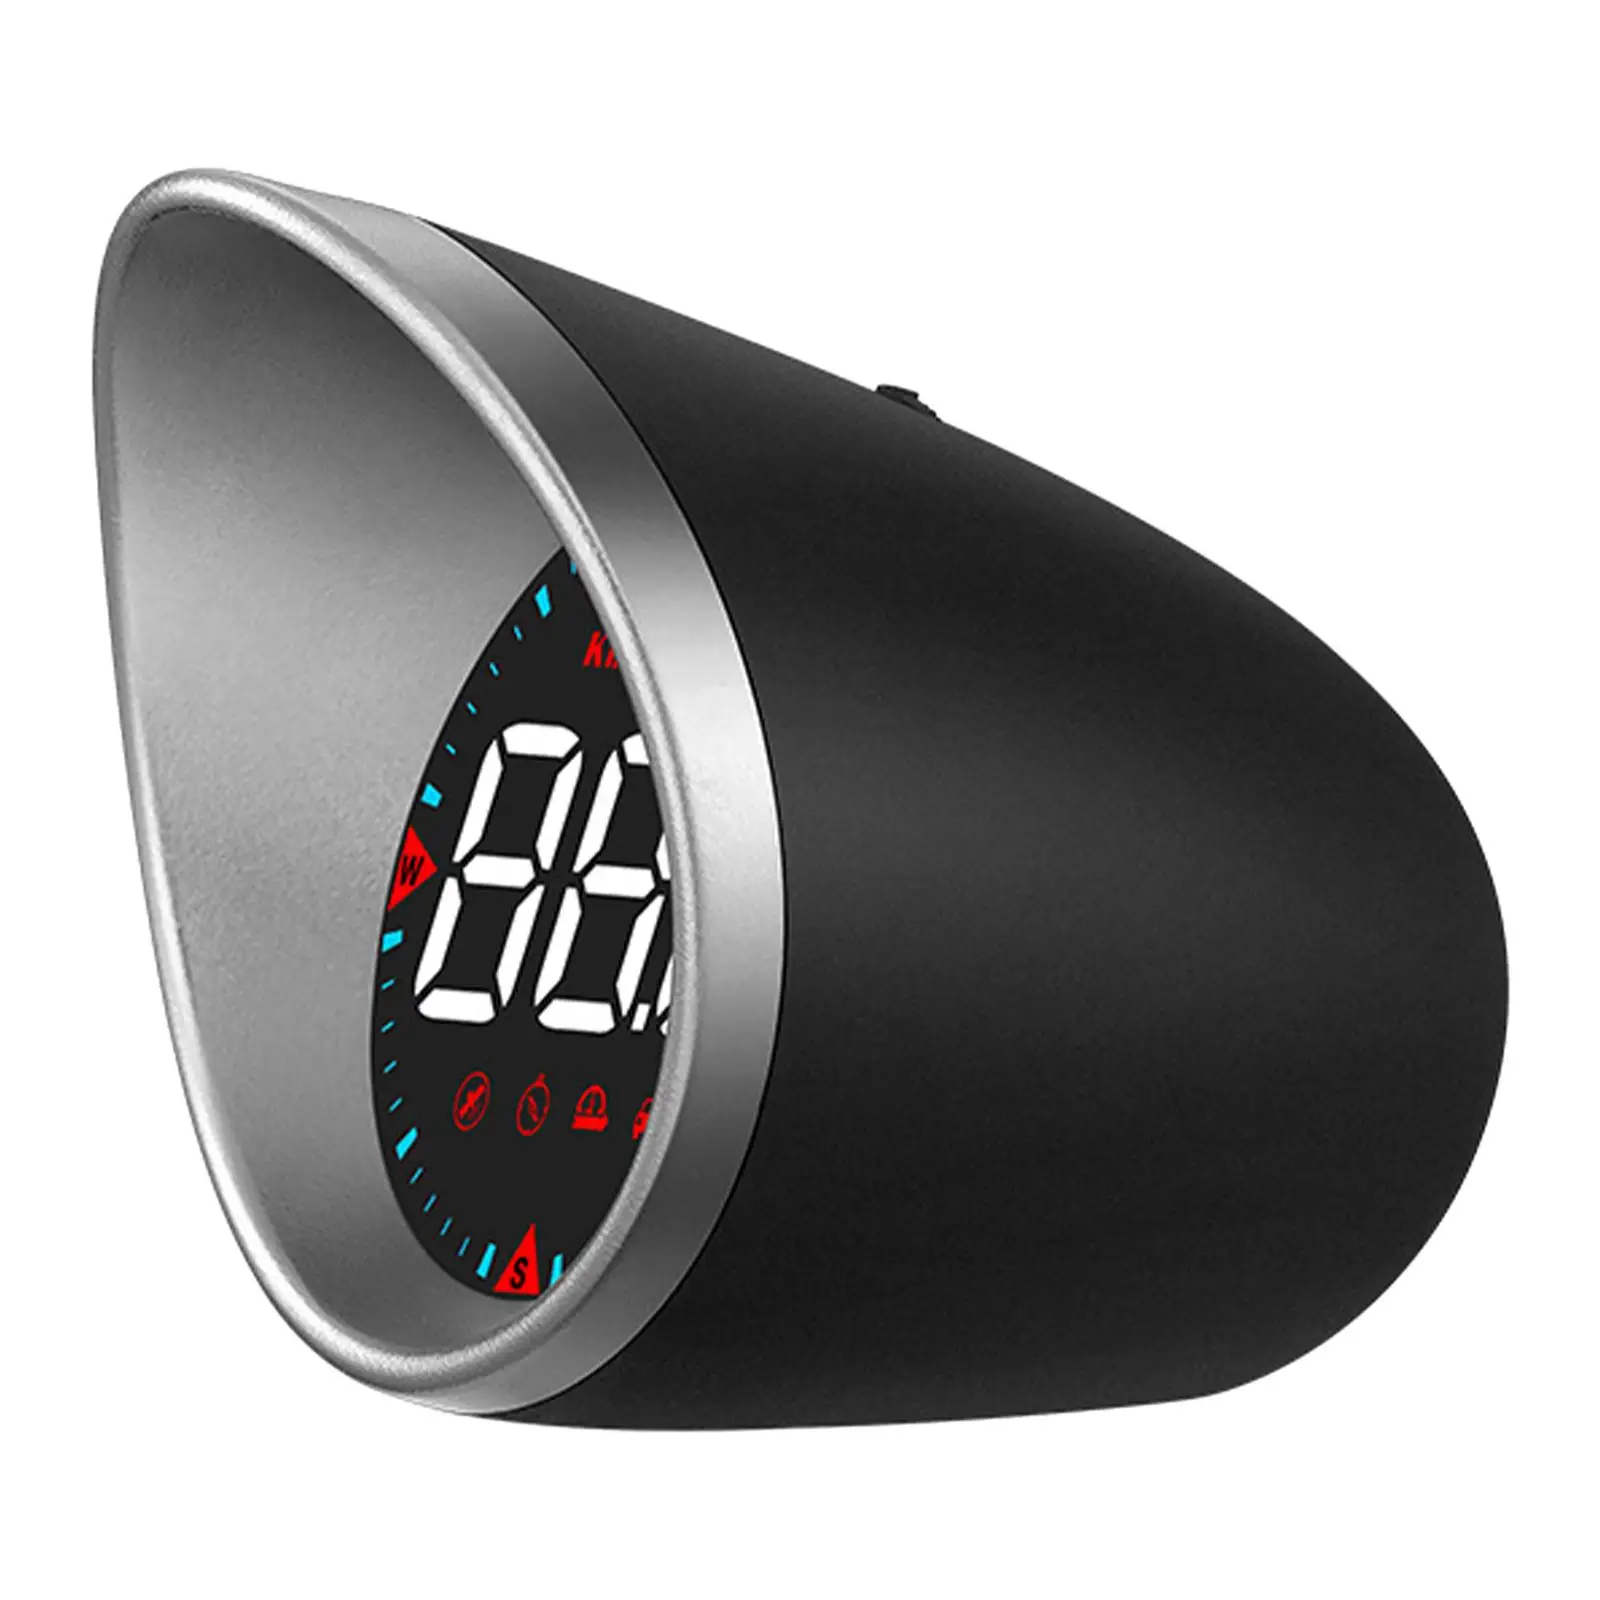 G5 HUD  Display Mileage Measurement 1.8`` LED Screen Digital USB GPS Speedometers   and Trucks Compass Angle